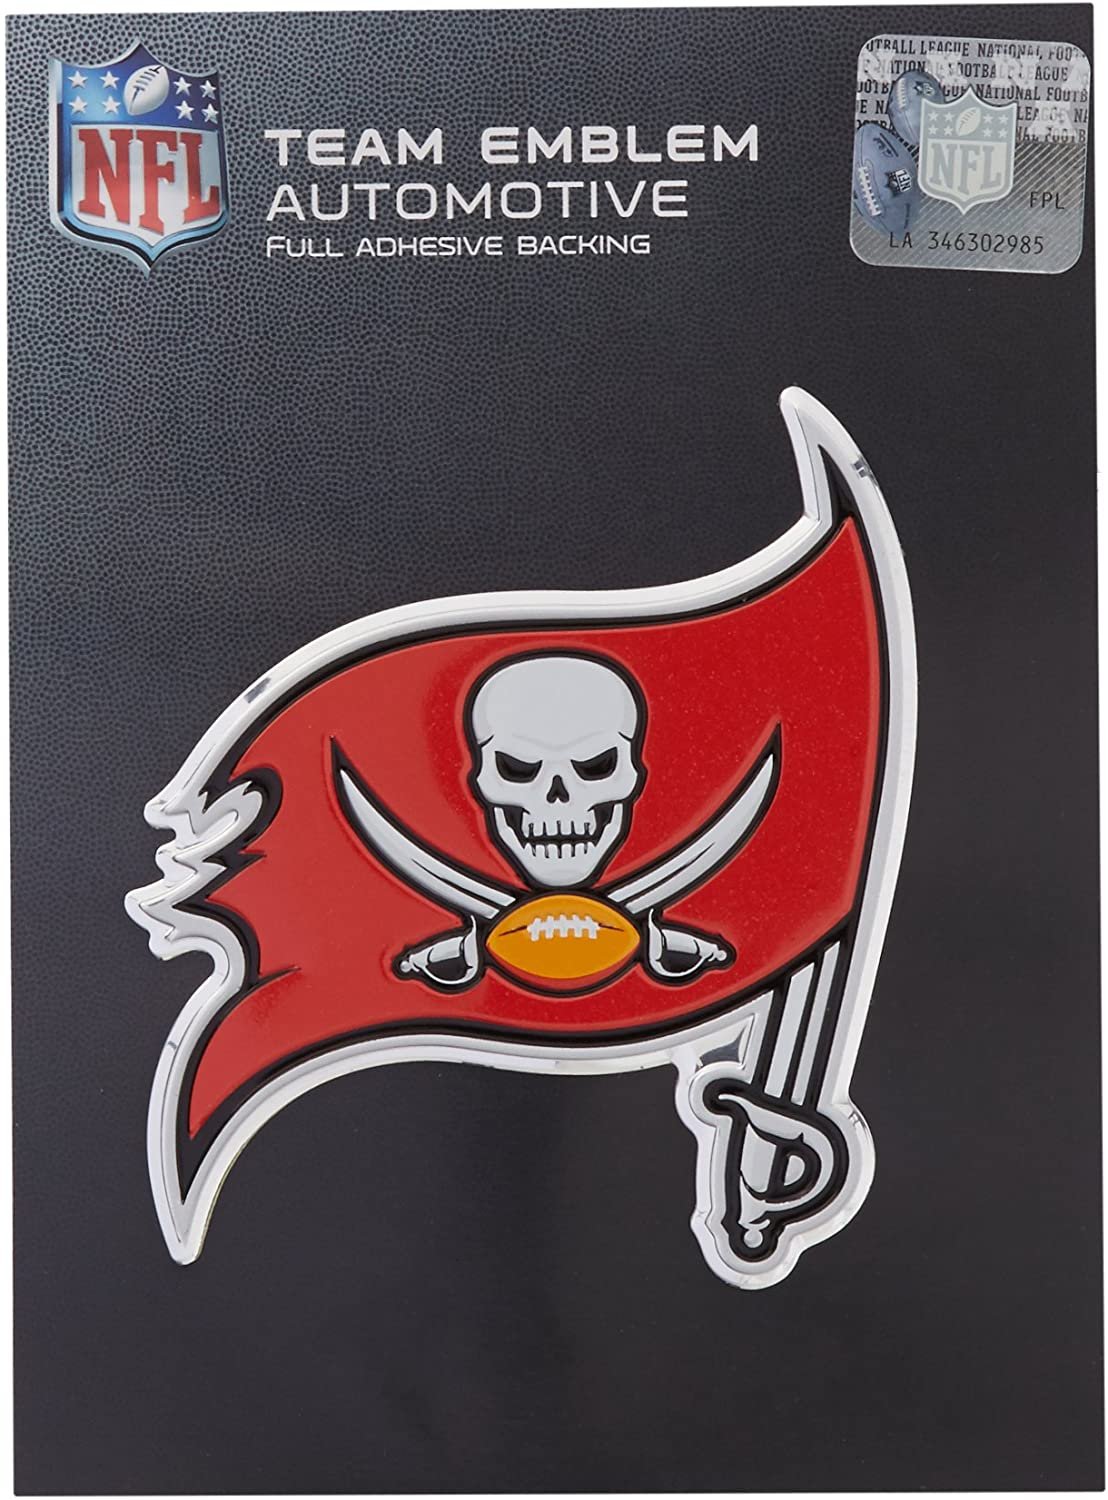 Tampa Bay Buccaneers Auto Emblem, Aluminum Metal, Embossed Team Color, Raised Decal Sticker, Full Adhesive Backing